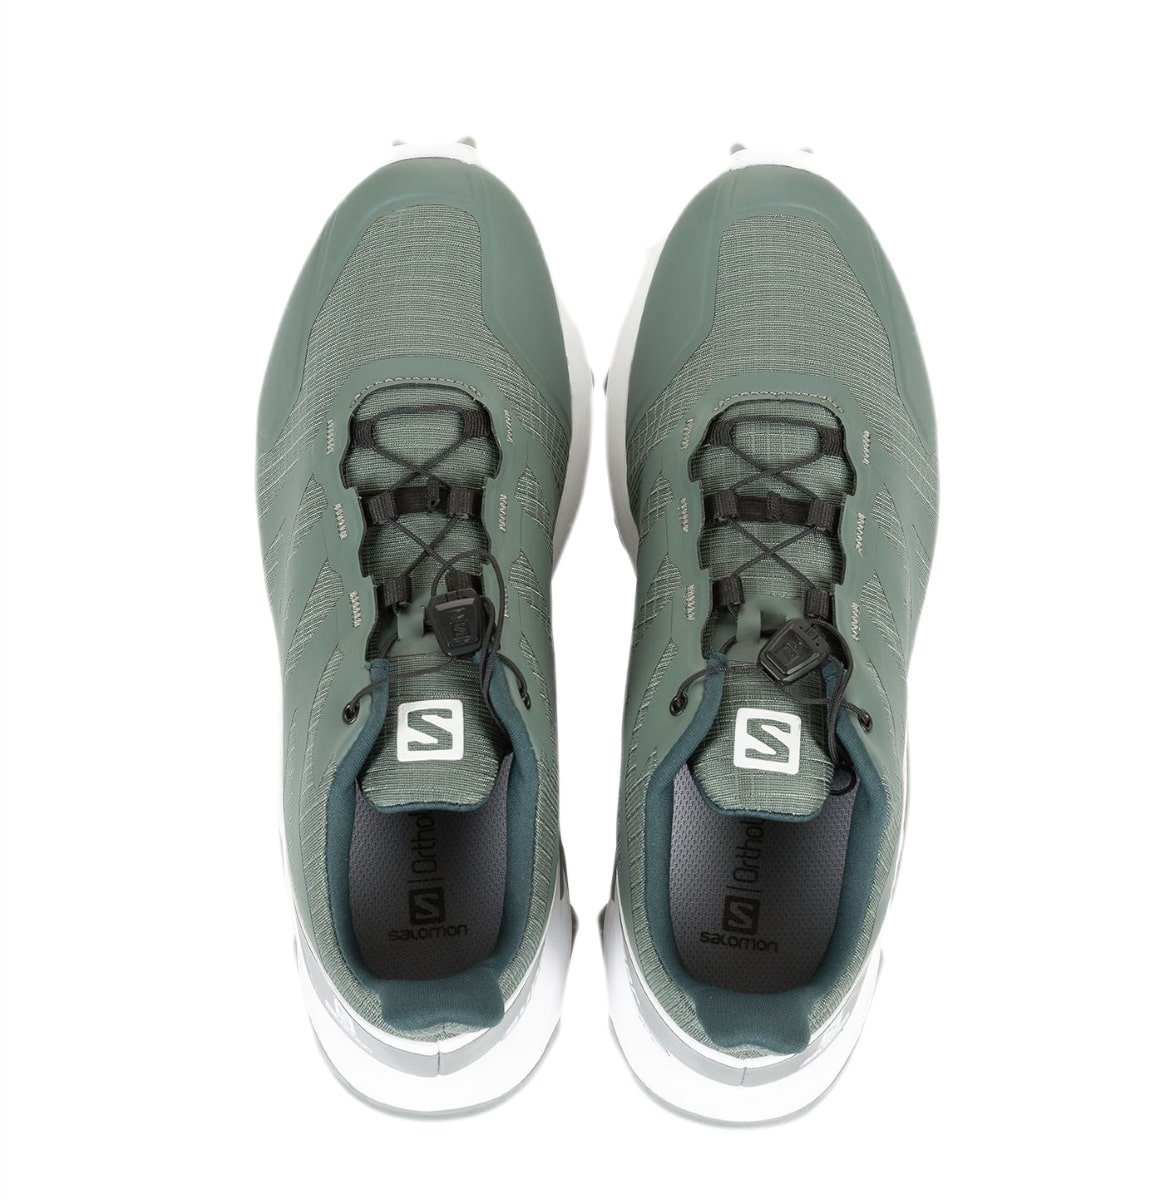 Obuv Salomon Supercross M – zelená/biela/sivá